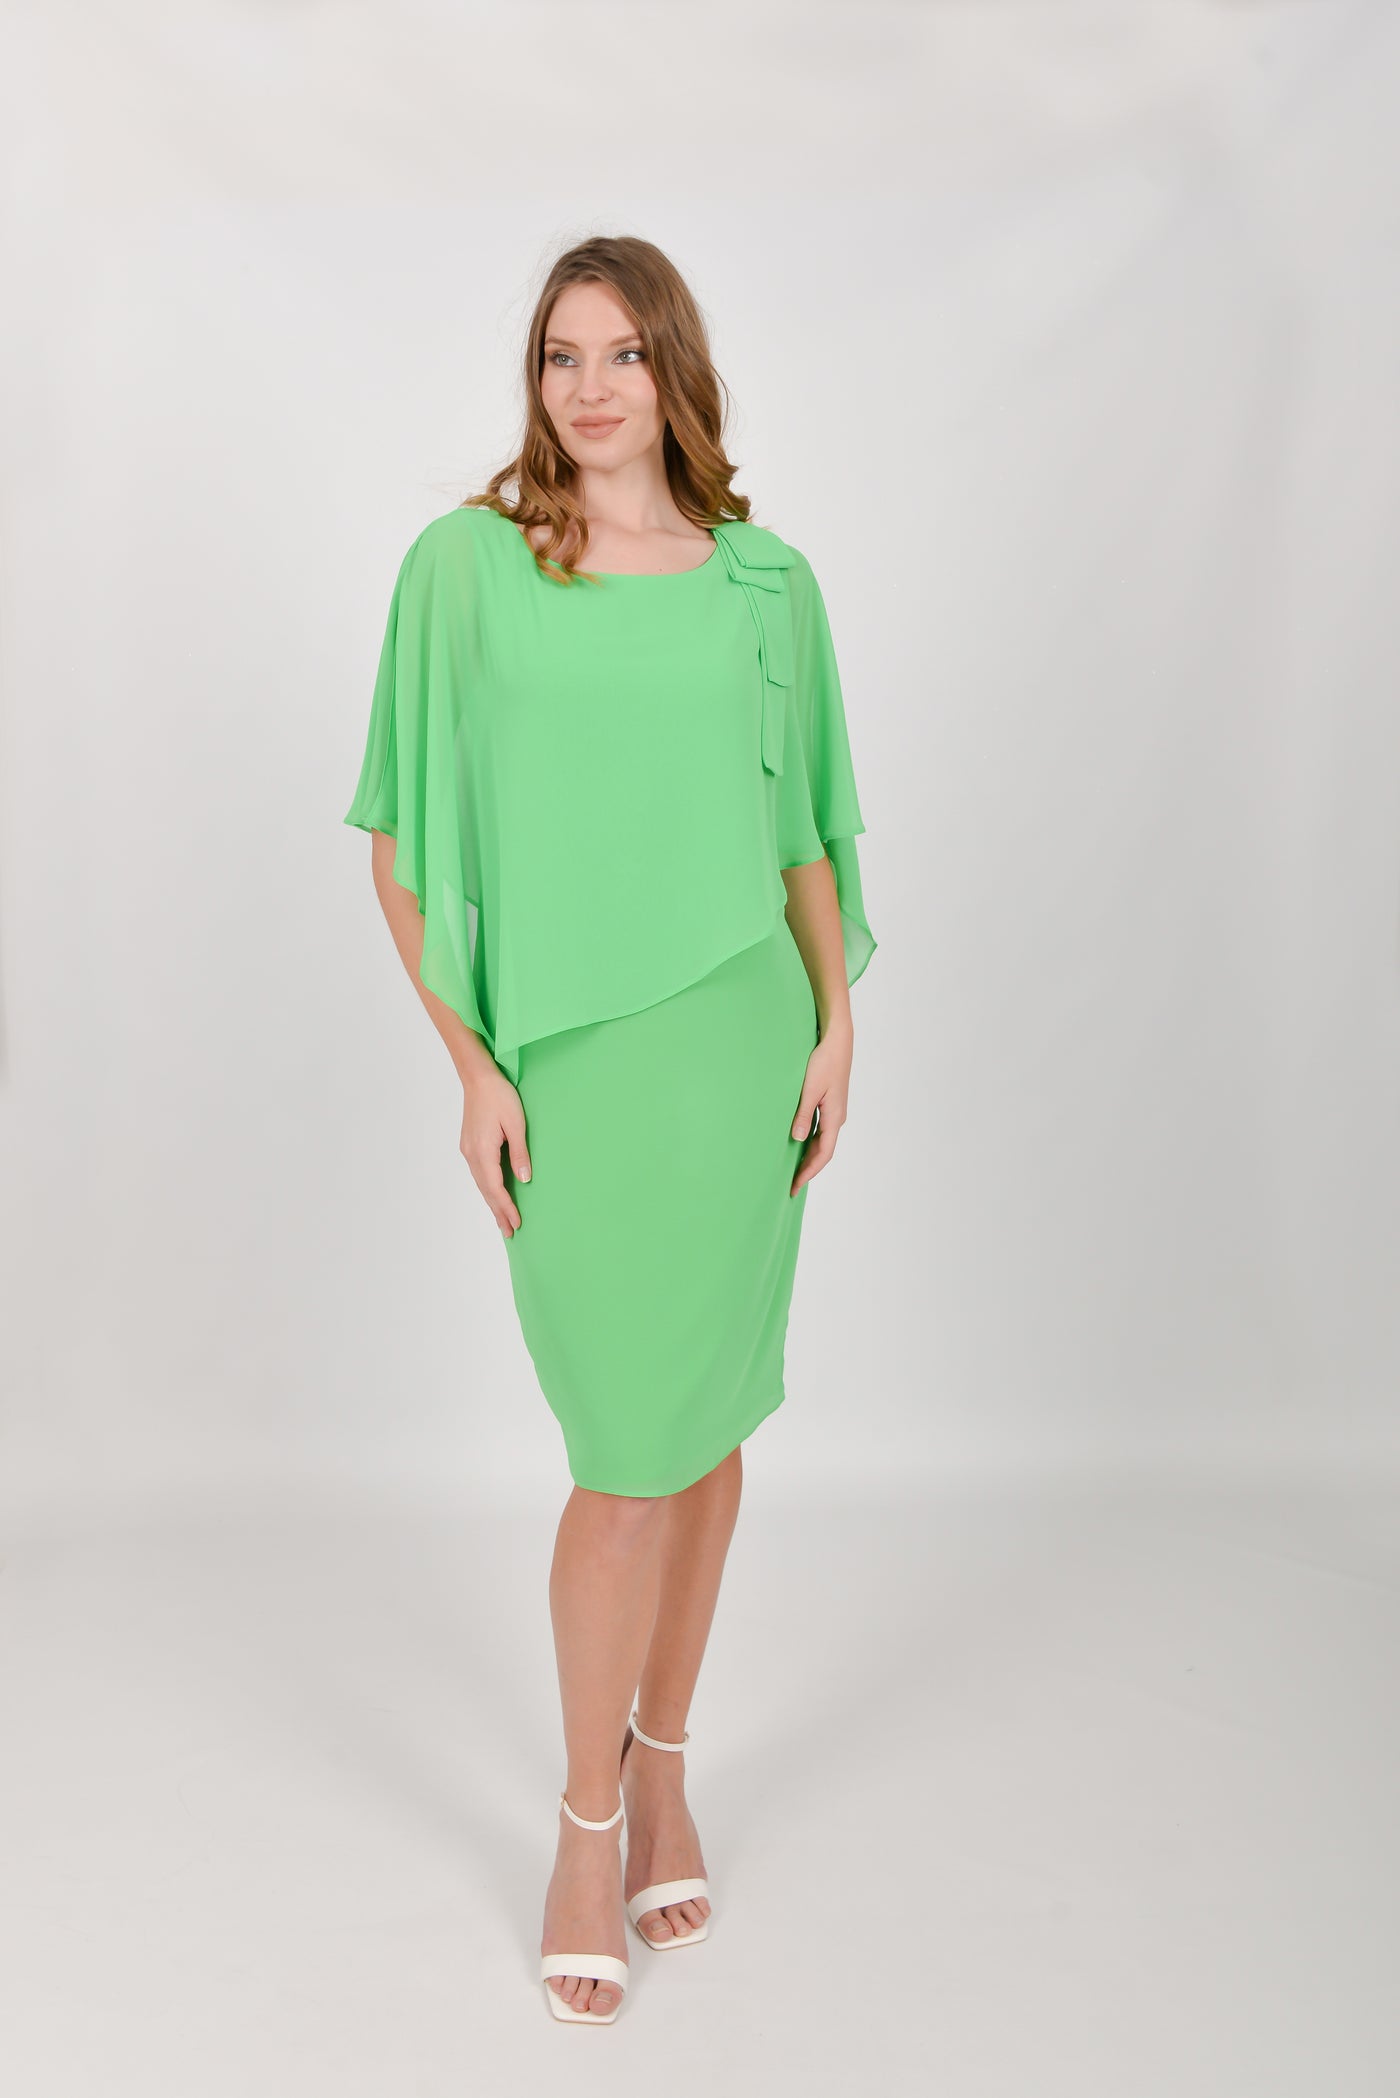 Green Dress With Chiffon Overlay